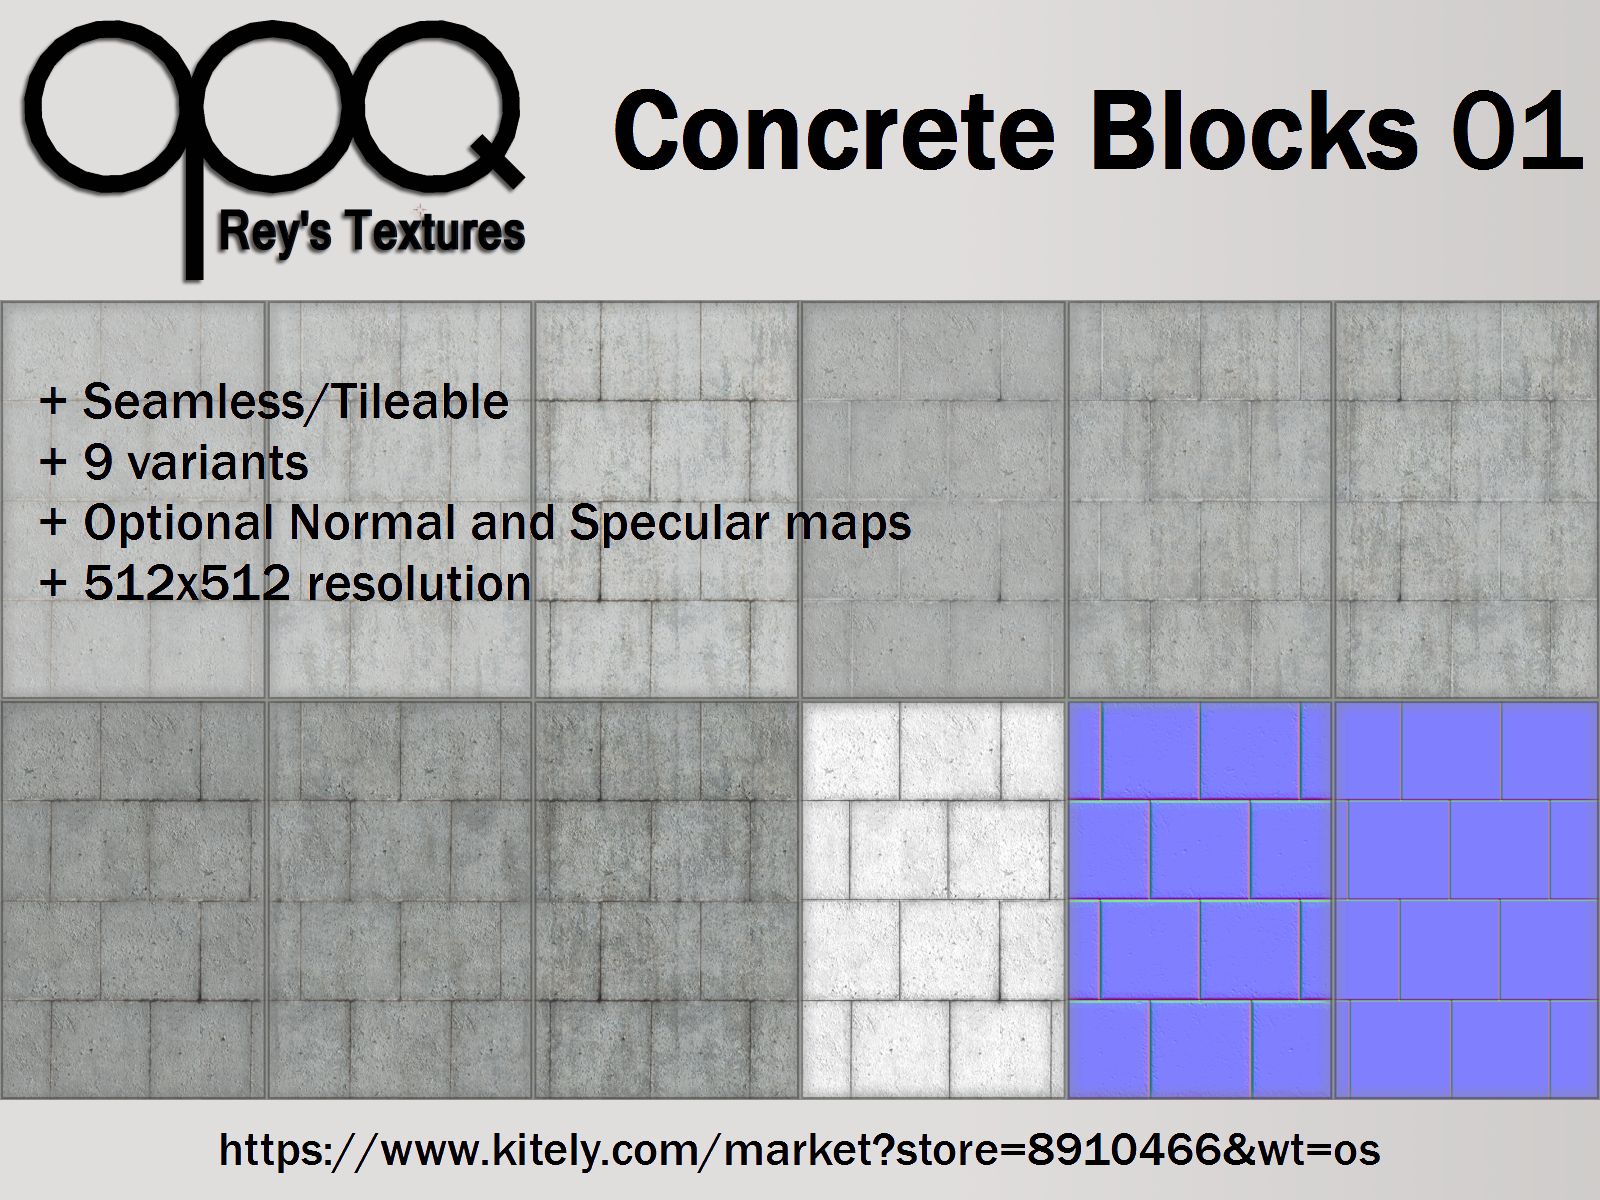 Rey's Concrete Blocks 01 Poster Kitely.jpg